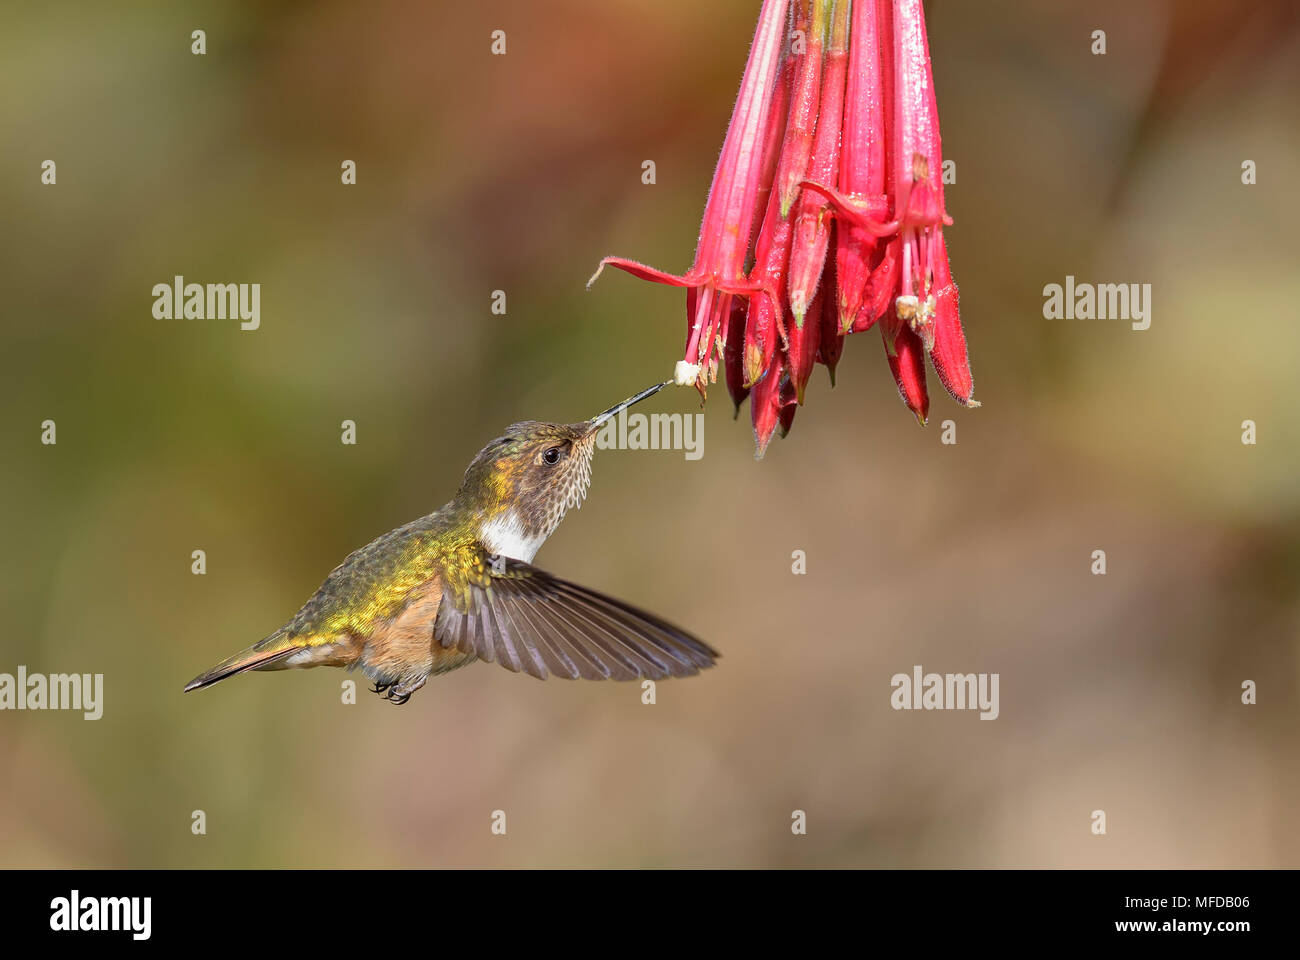 Volcano Hummingbird - Selasphorus flammula, beautiful colorful small hummingbird from Central America forests, Costa Rica. Stock Photo